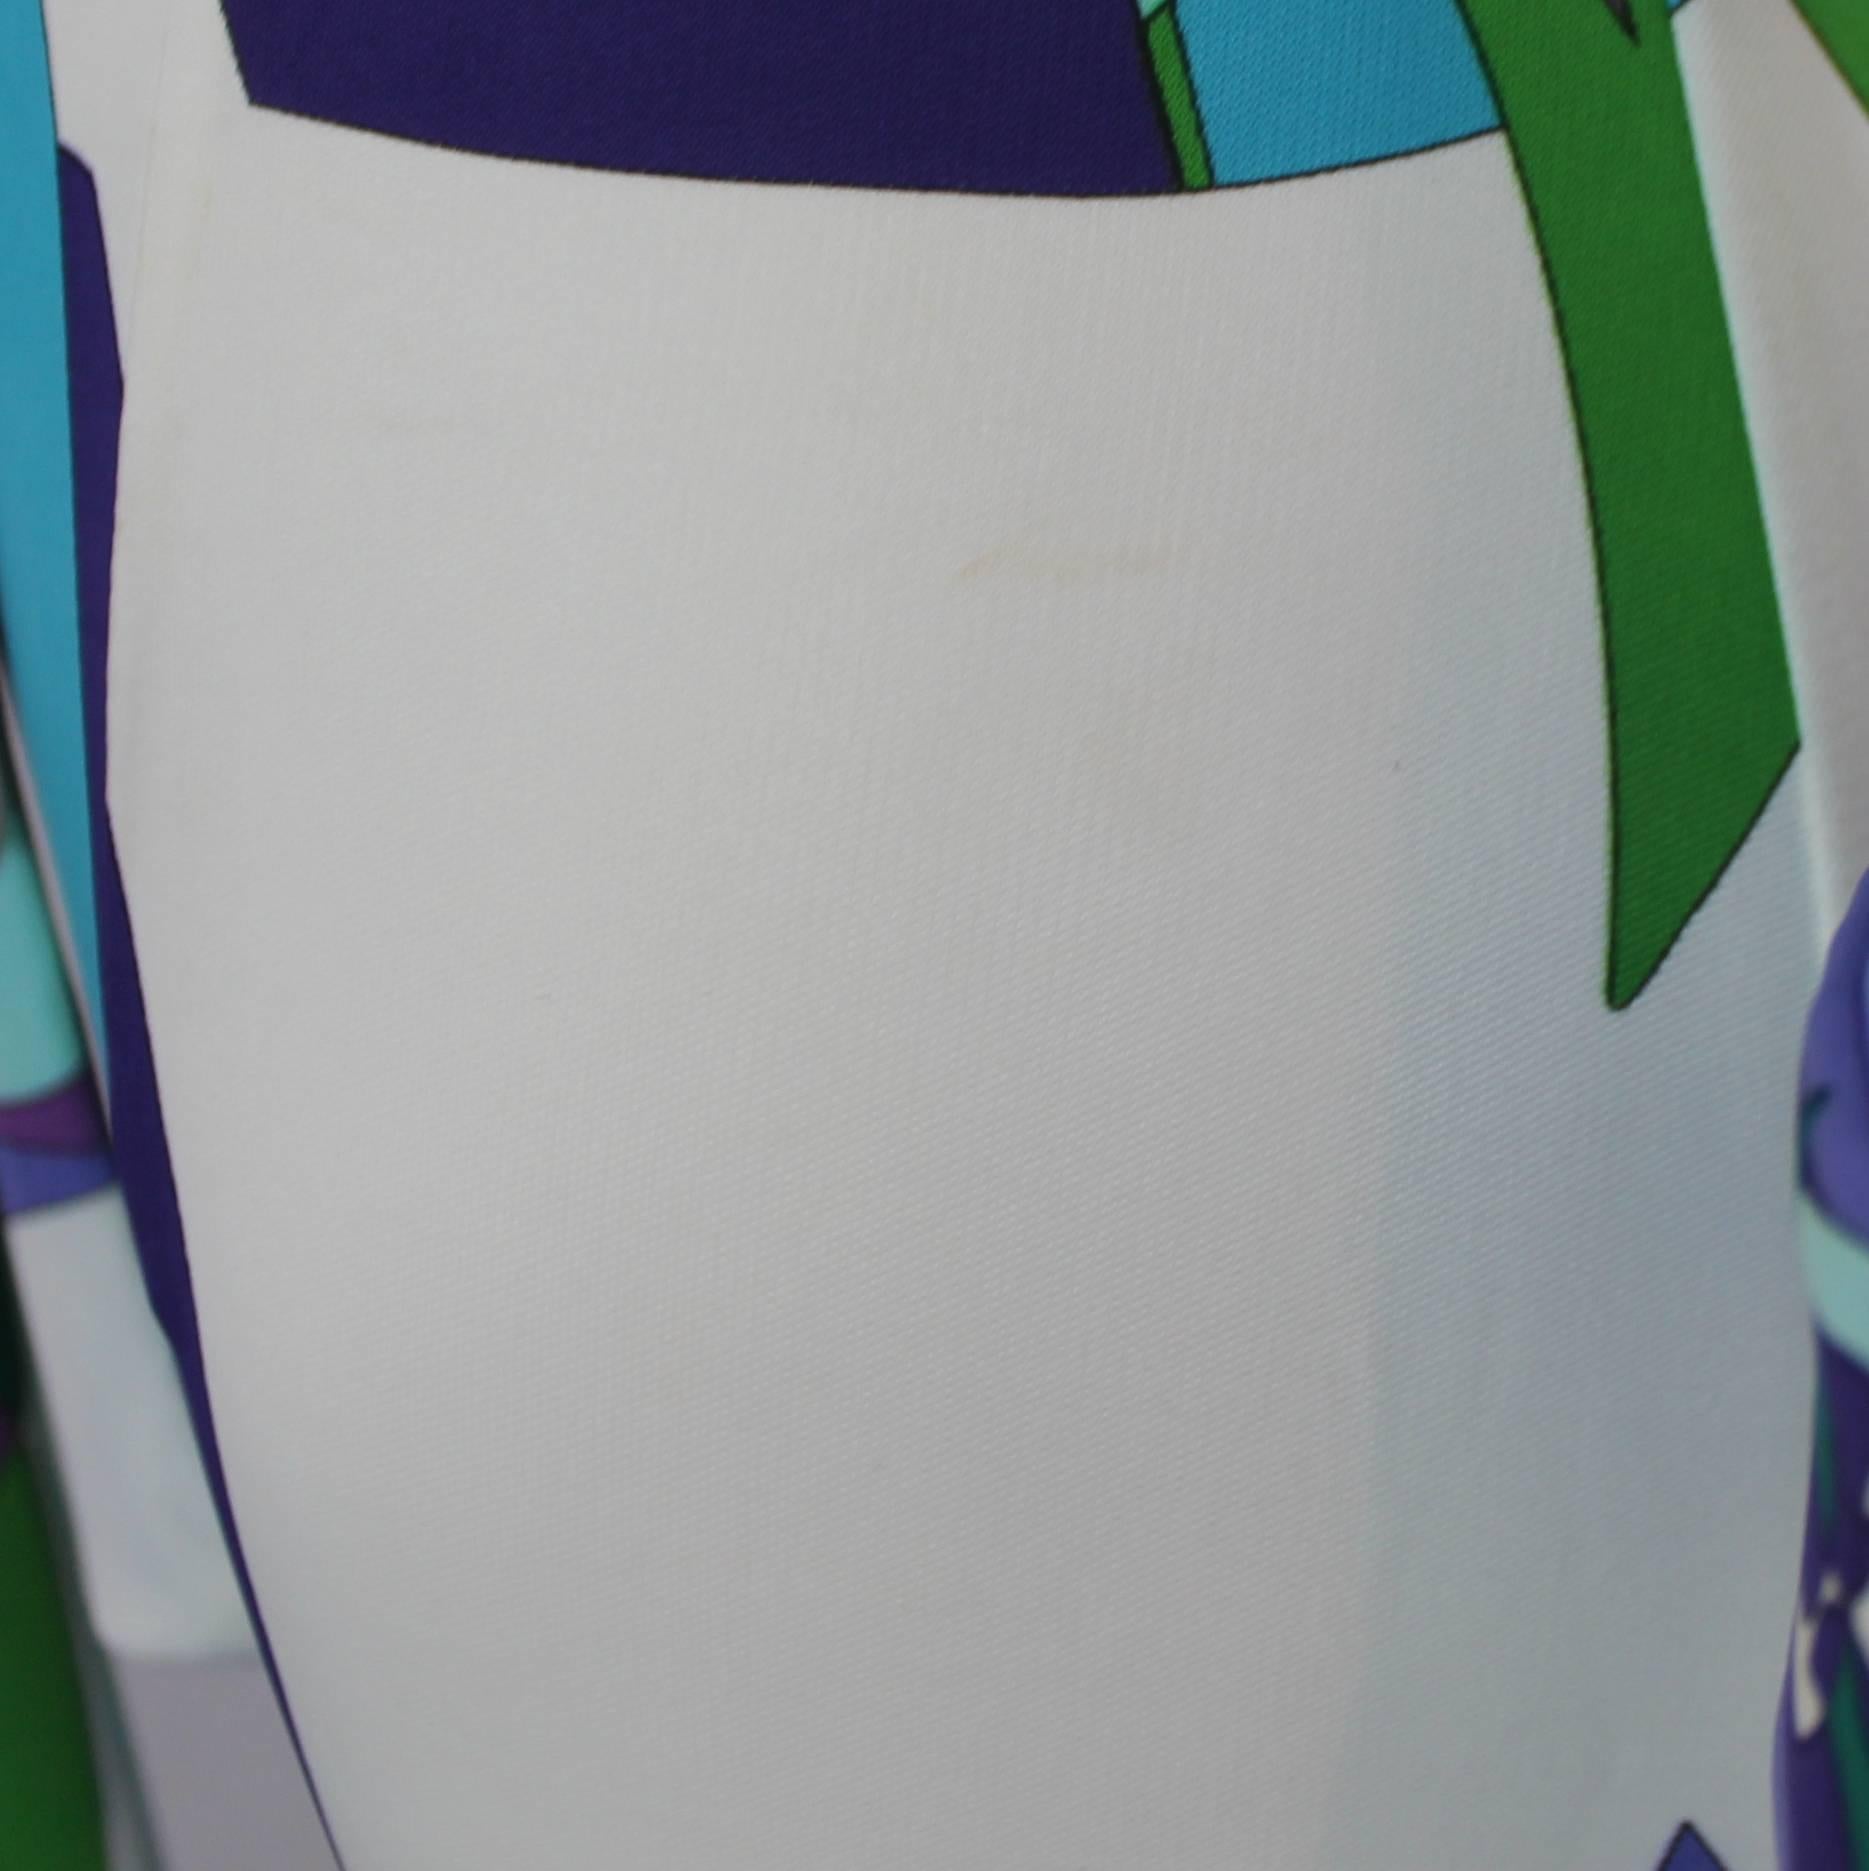 Emilio Pucci Blue & Green Geometric Print Jersey Dress - 6 3